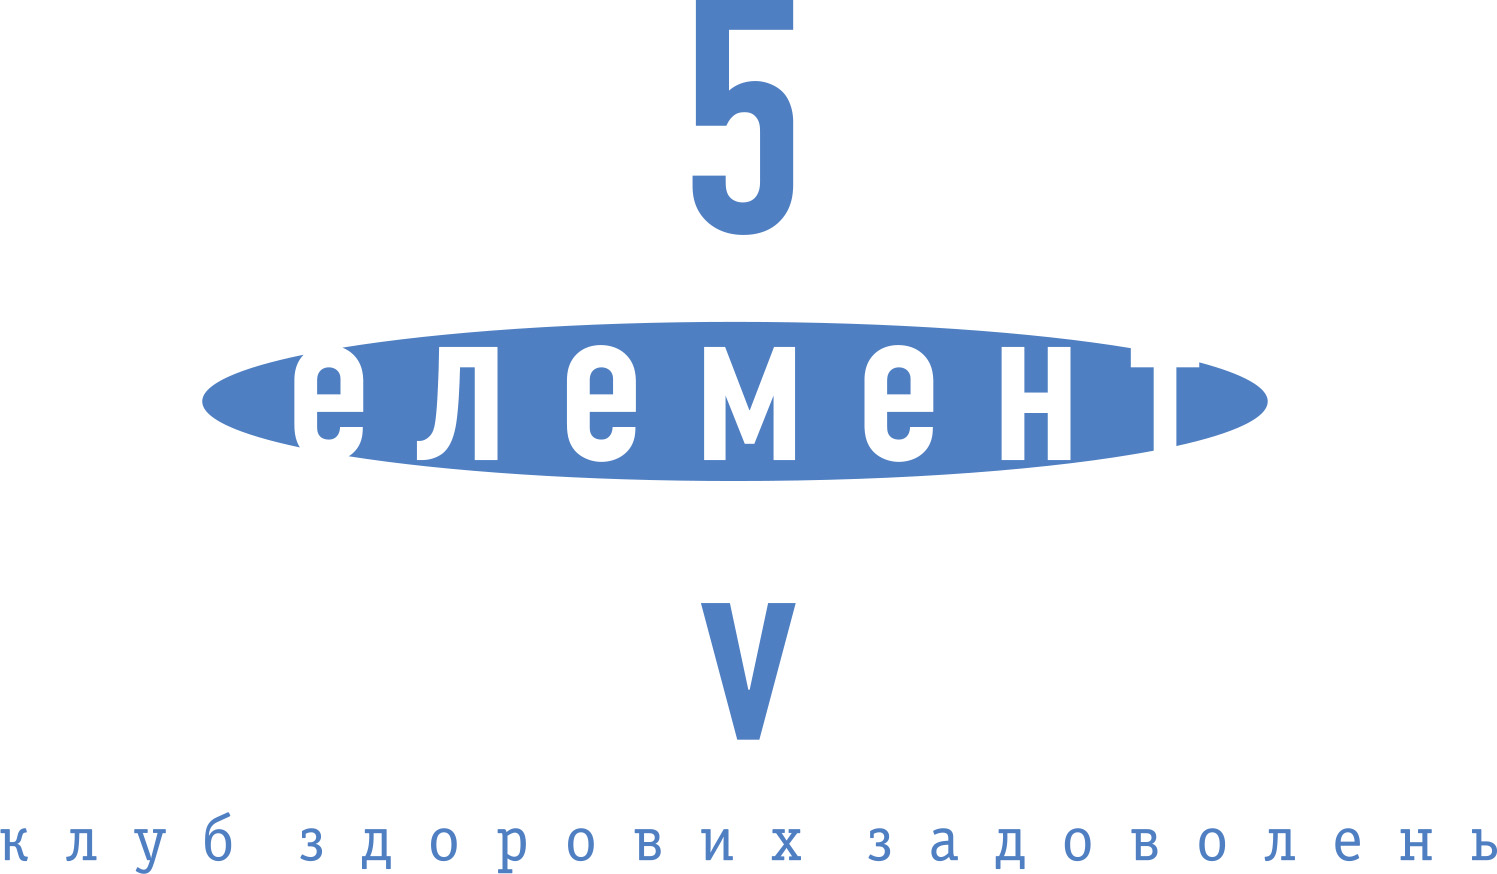 5_element_logo